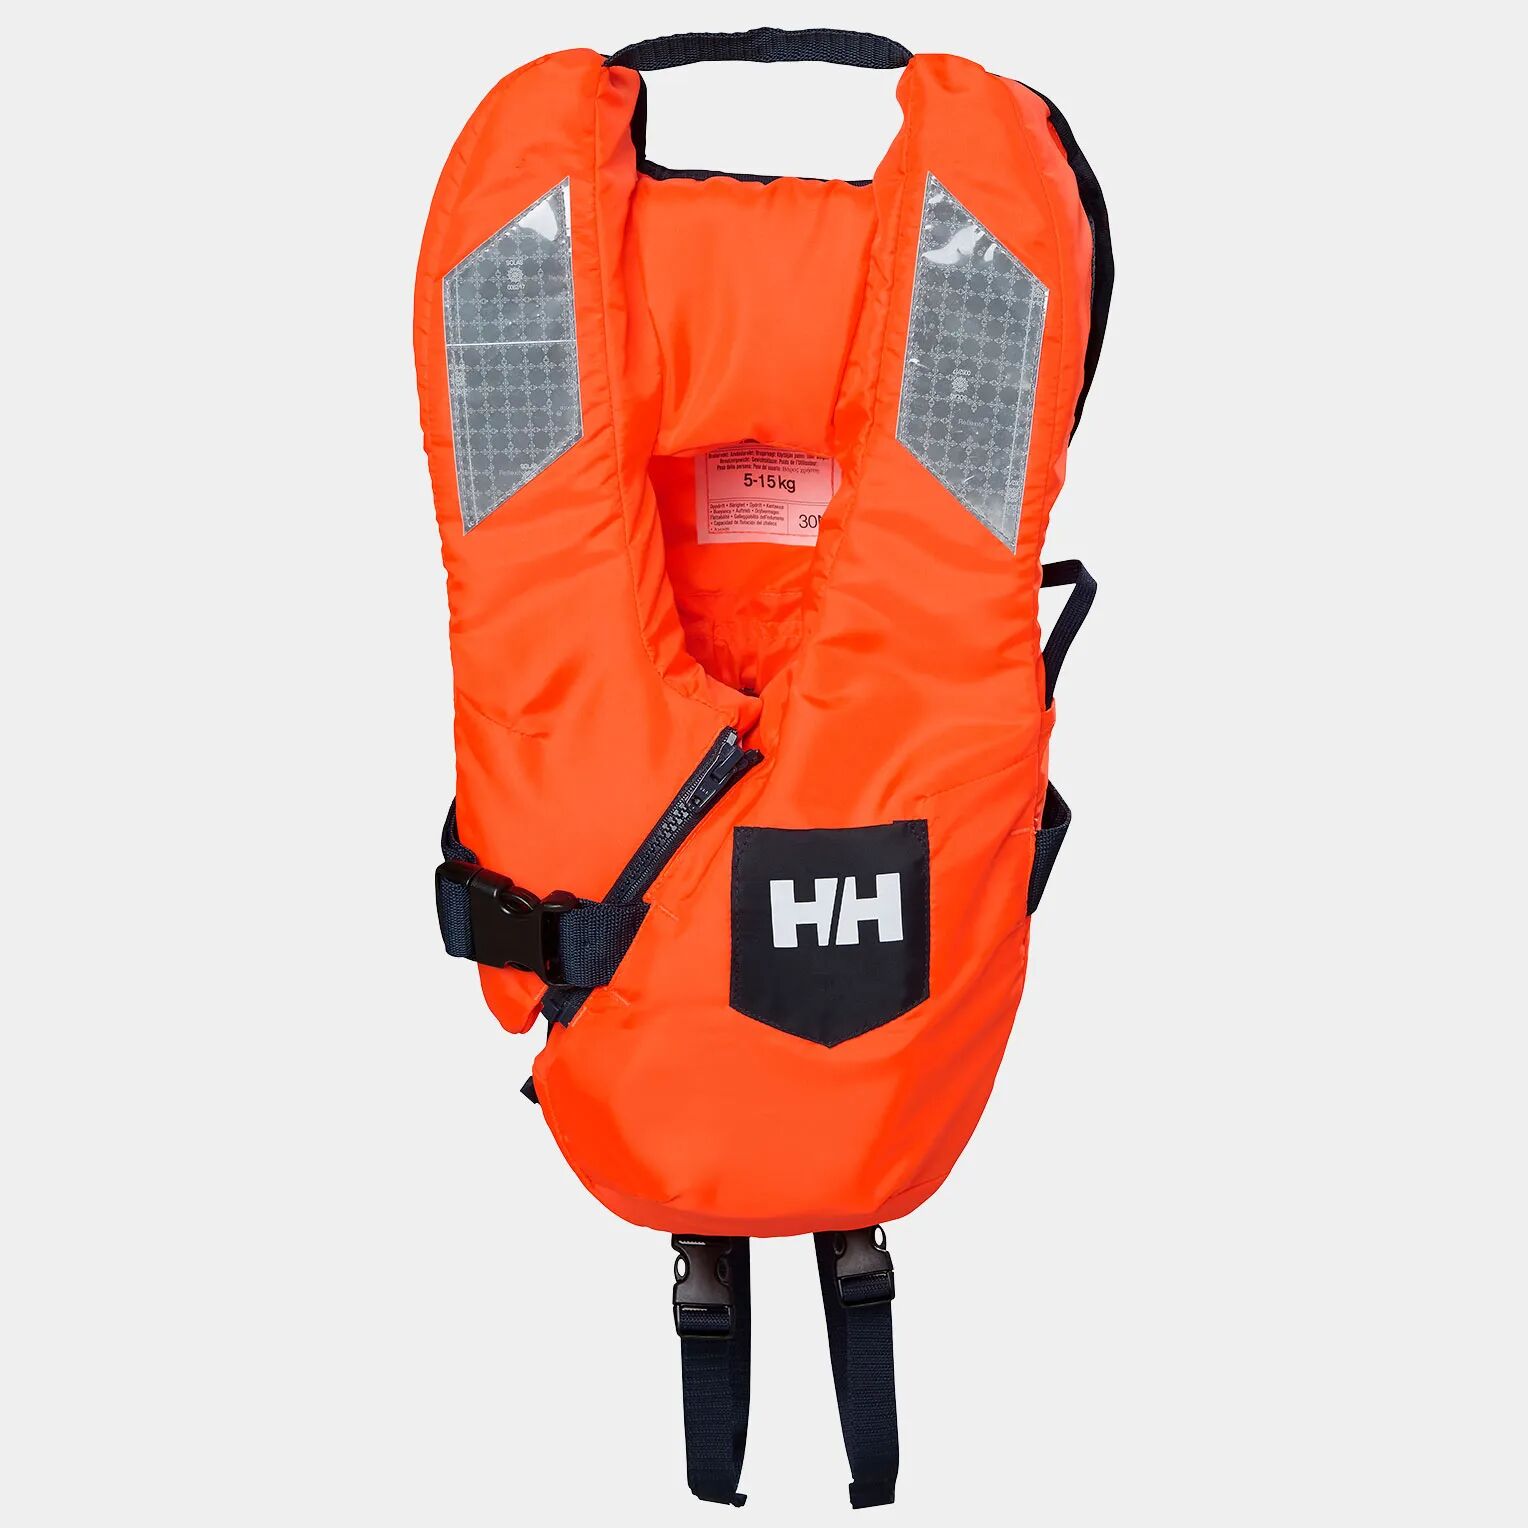 Helly Hansen Baby Safe Life Protection Jacket Orange 5/15KG - Fluor Orang Orange - Unisex